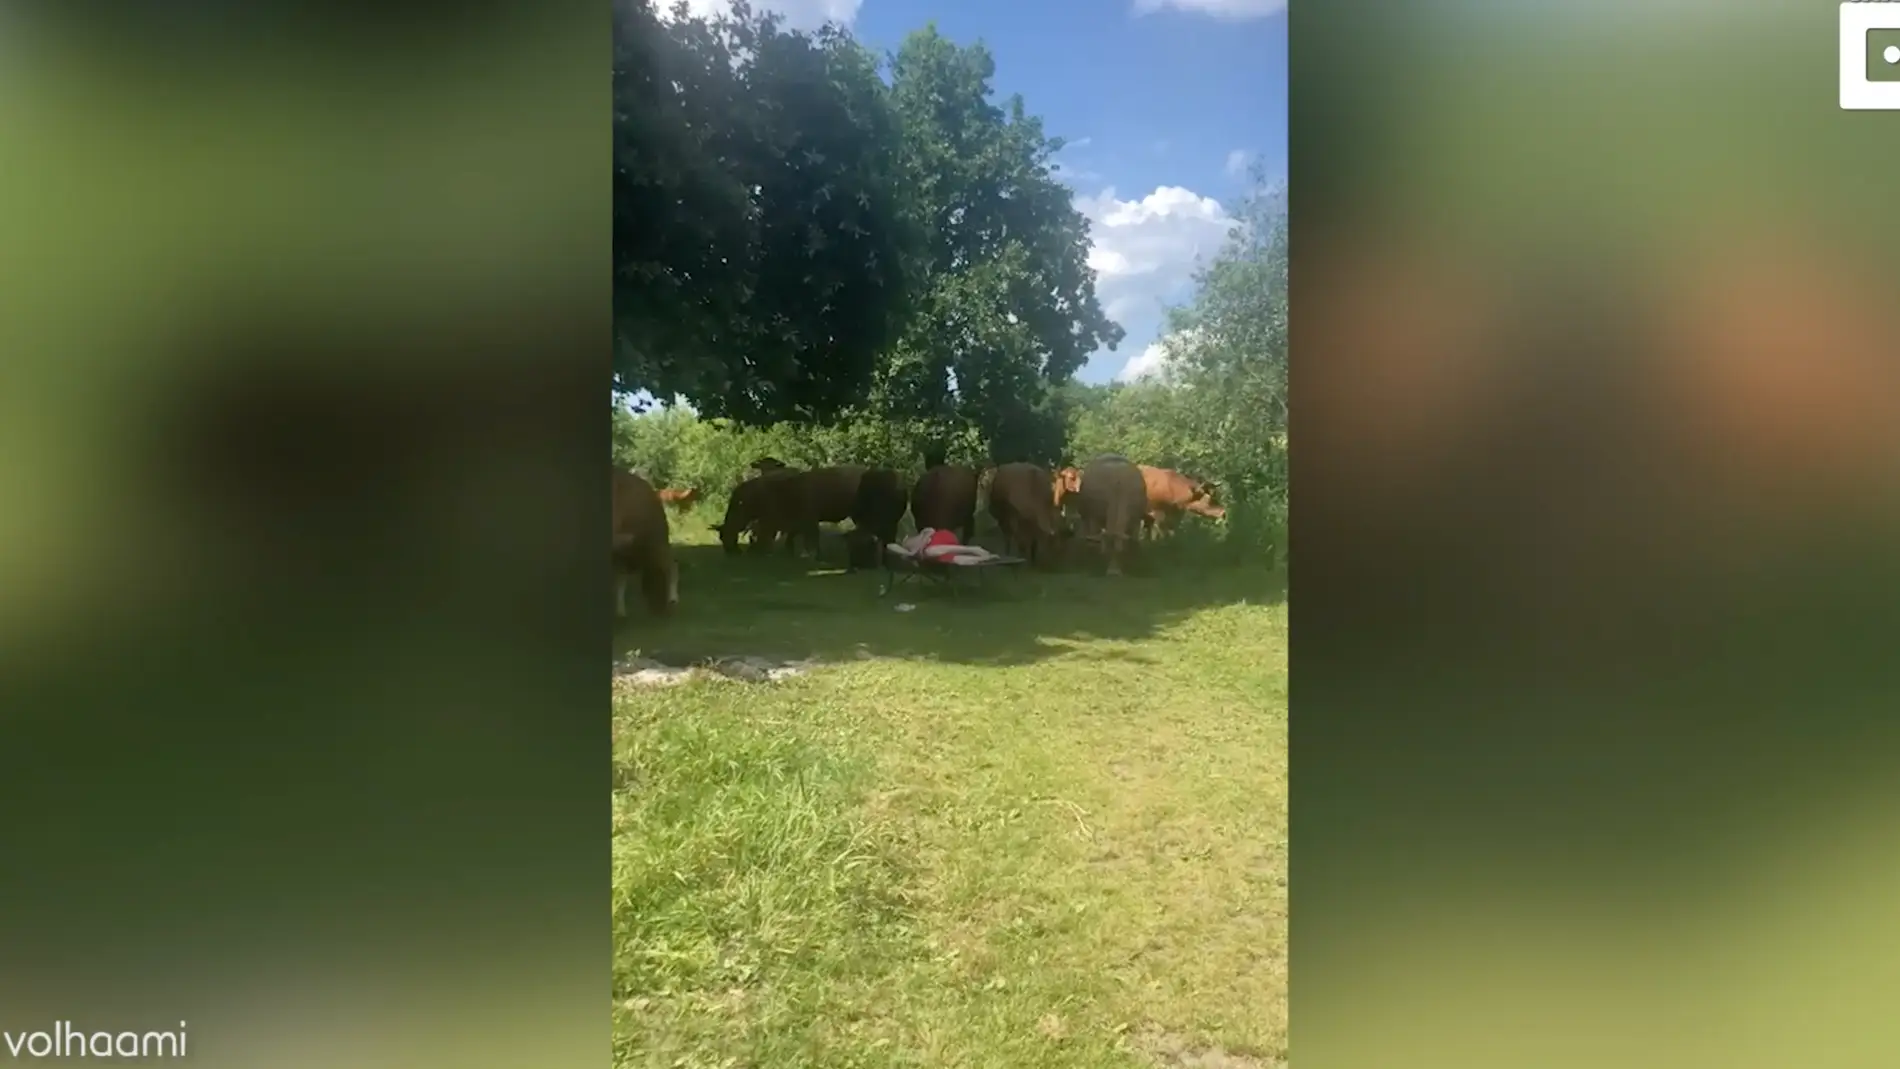 Se despierta rodeada de vacas